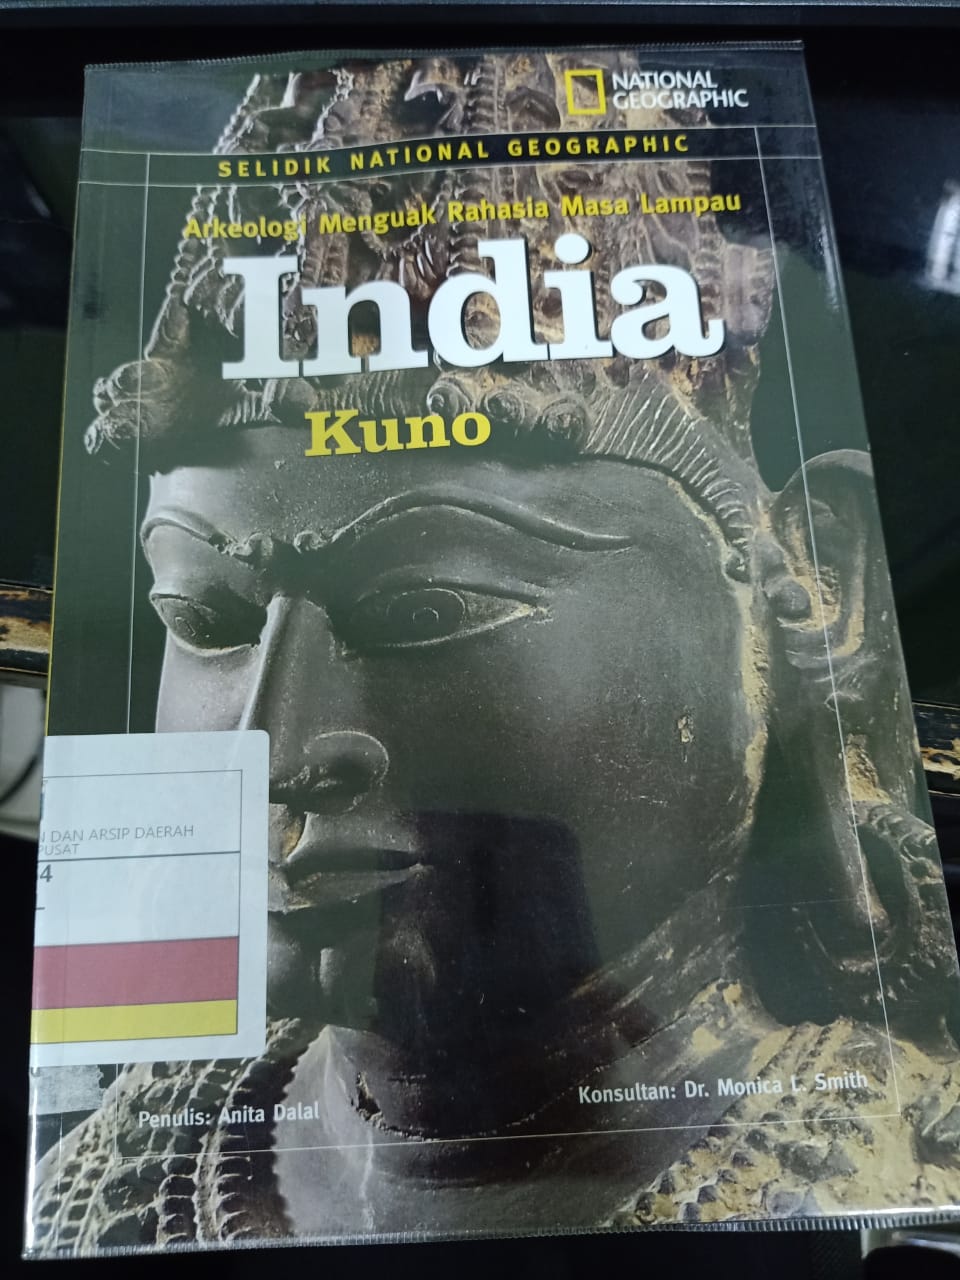 National Geographic Arkeologi Menguak Rahasia Masa Lampau :  India Kuno